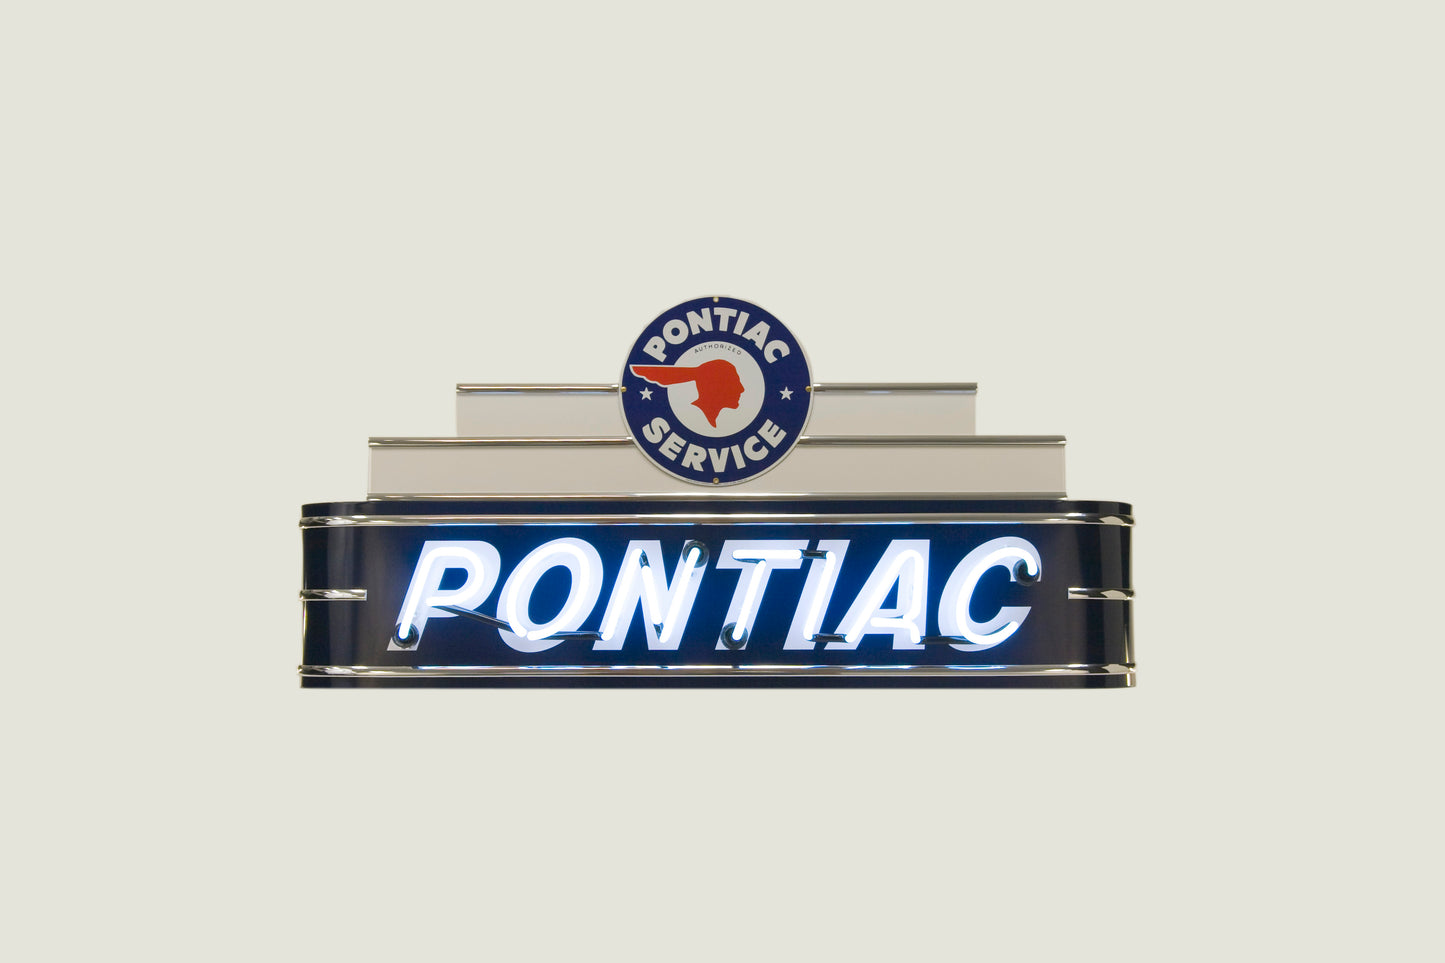 PONTIAC Neon Sign